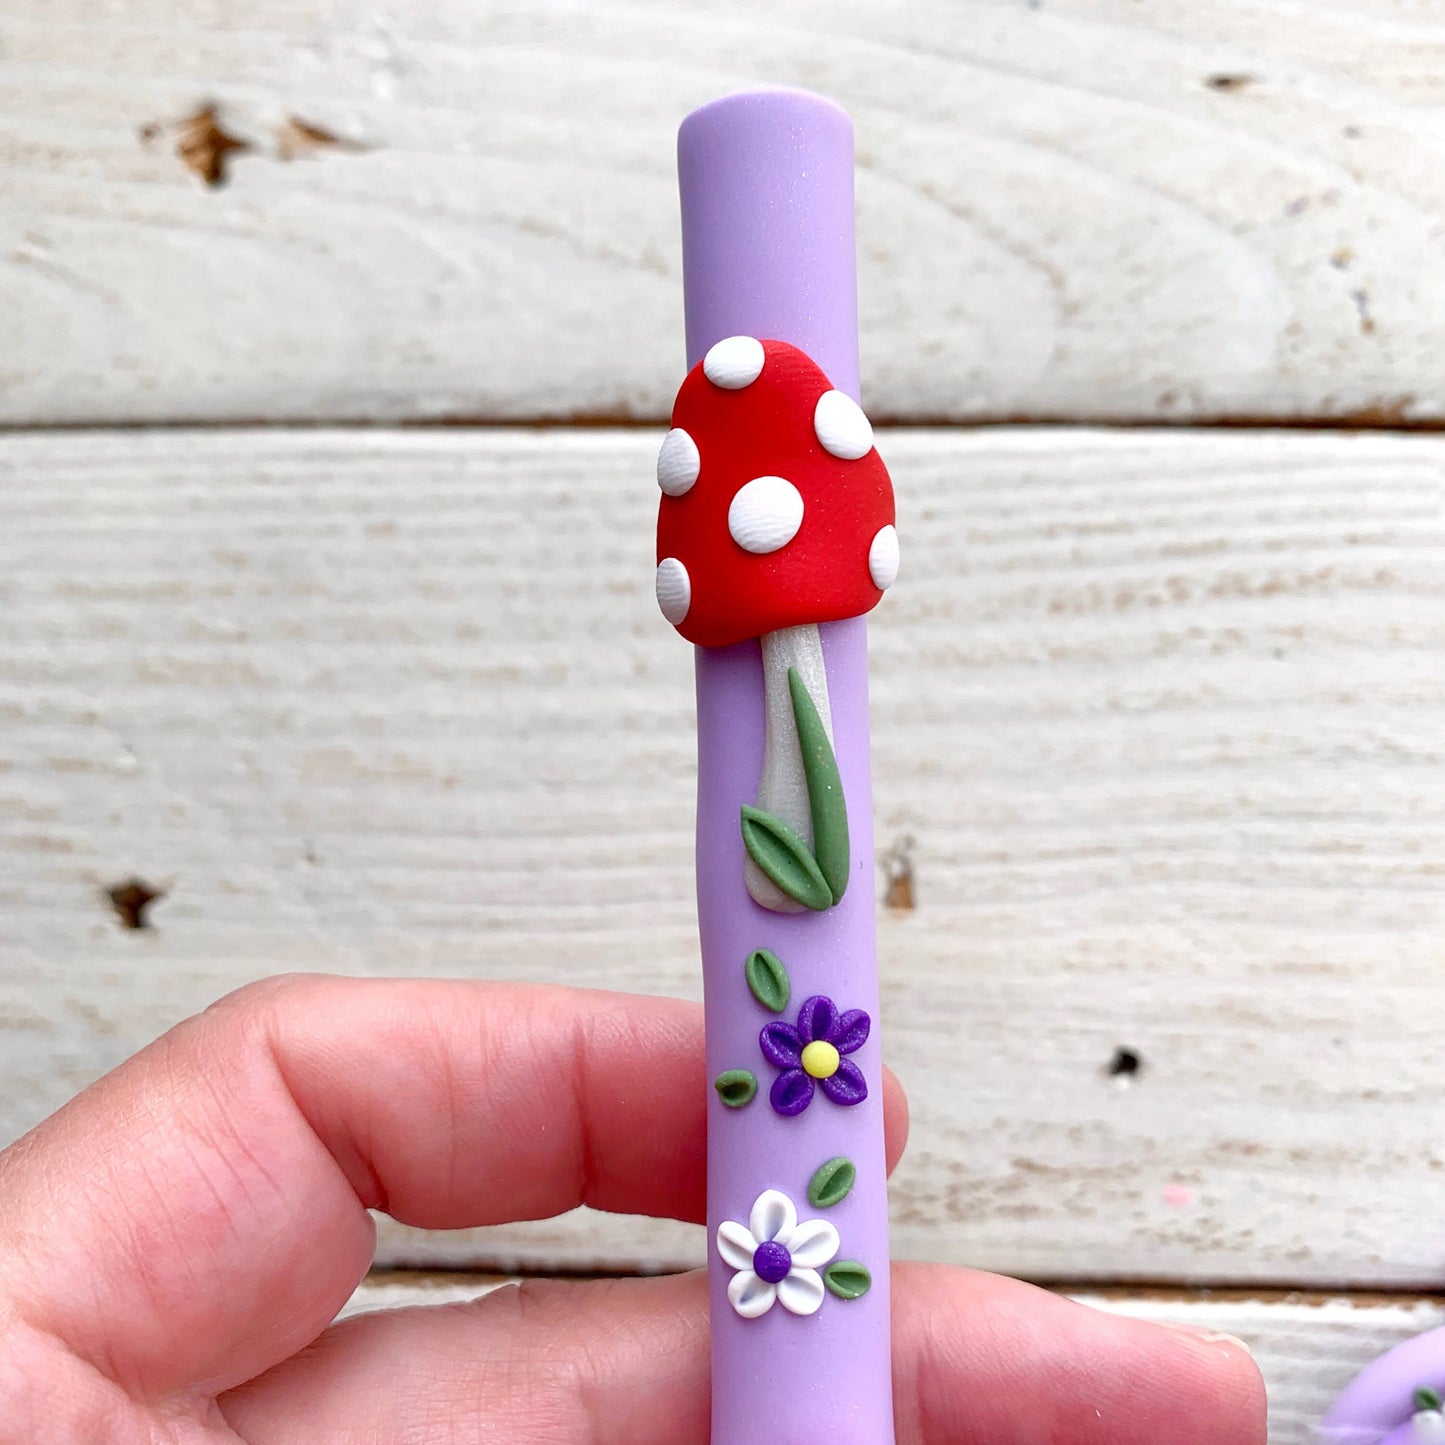 Purple mushroom crochet hook, cute toadstool polymer clay crochet hook, gift for a crocheter, craft supplies